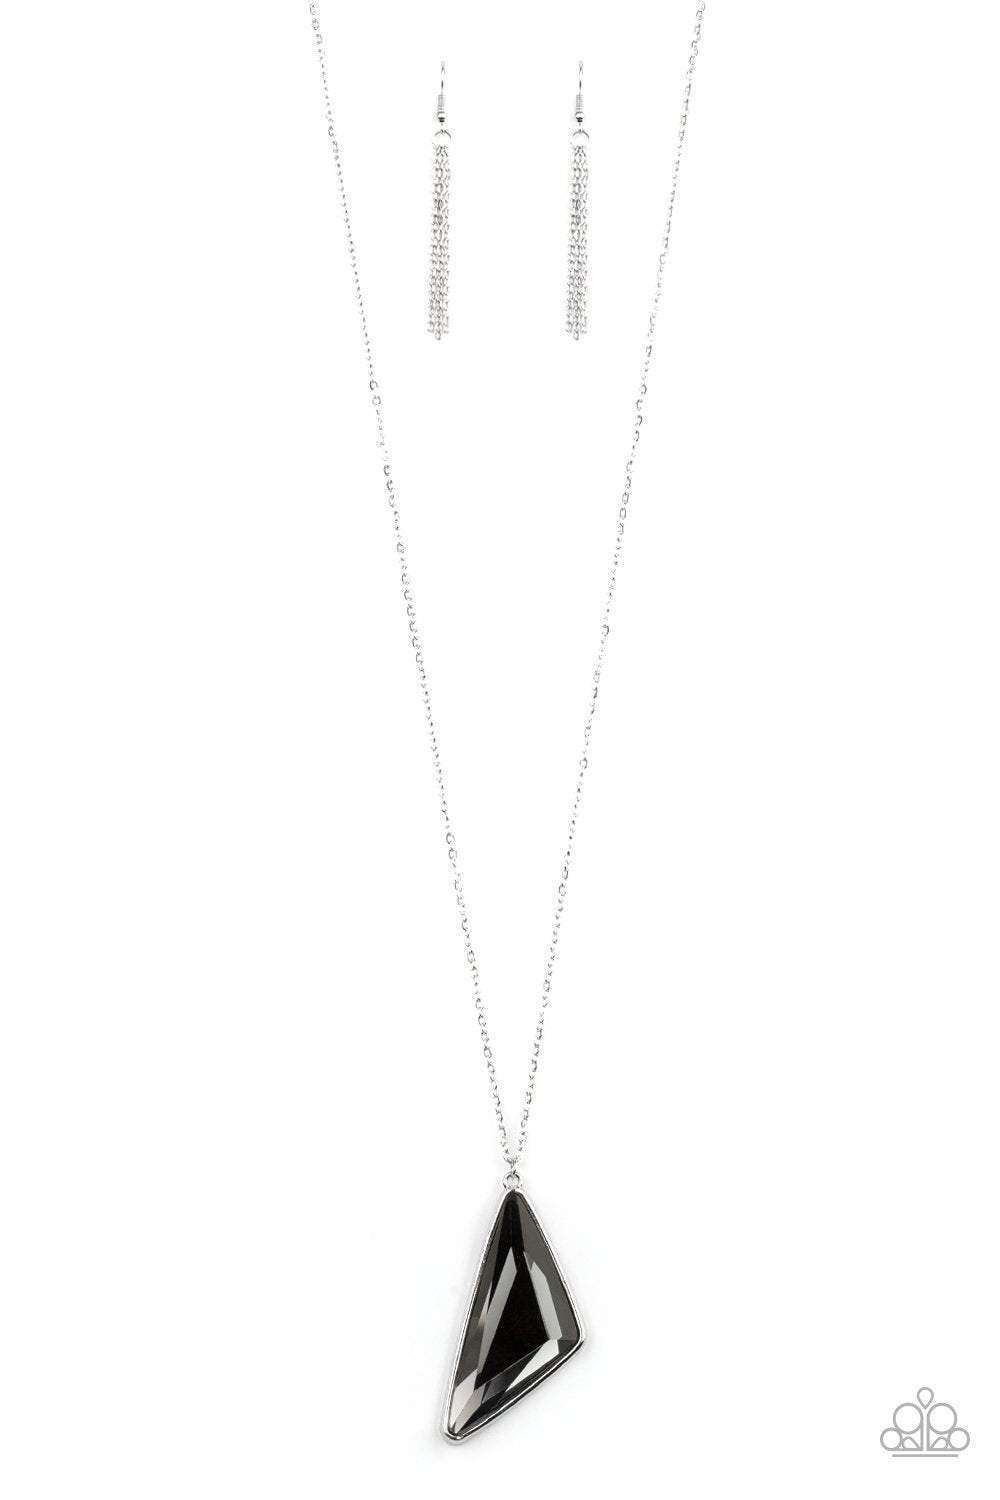 Ultra Sharp Silver Smoky Rhinestone Necklace - Paparazzi Accessories- lightbox - CarasShop.com - $5 Jewelry by Cara Jewels